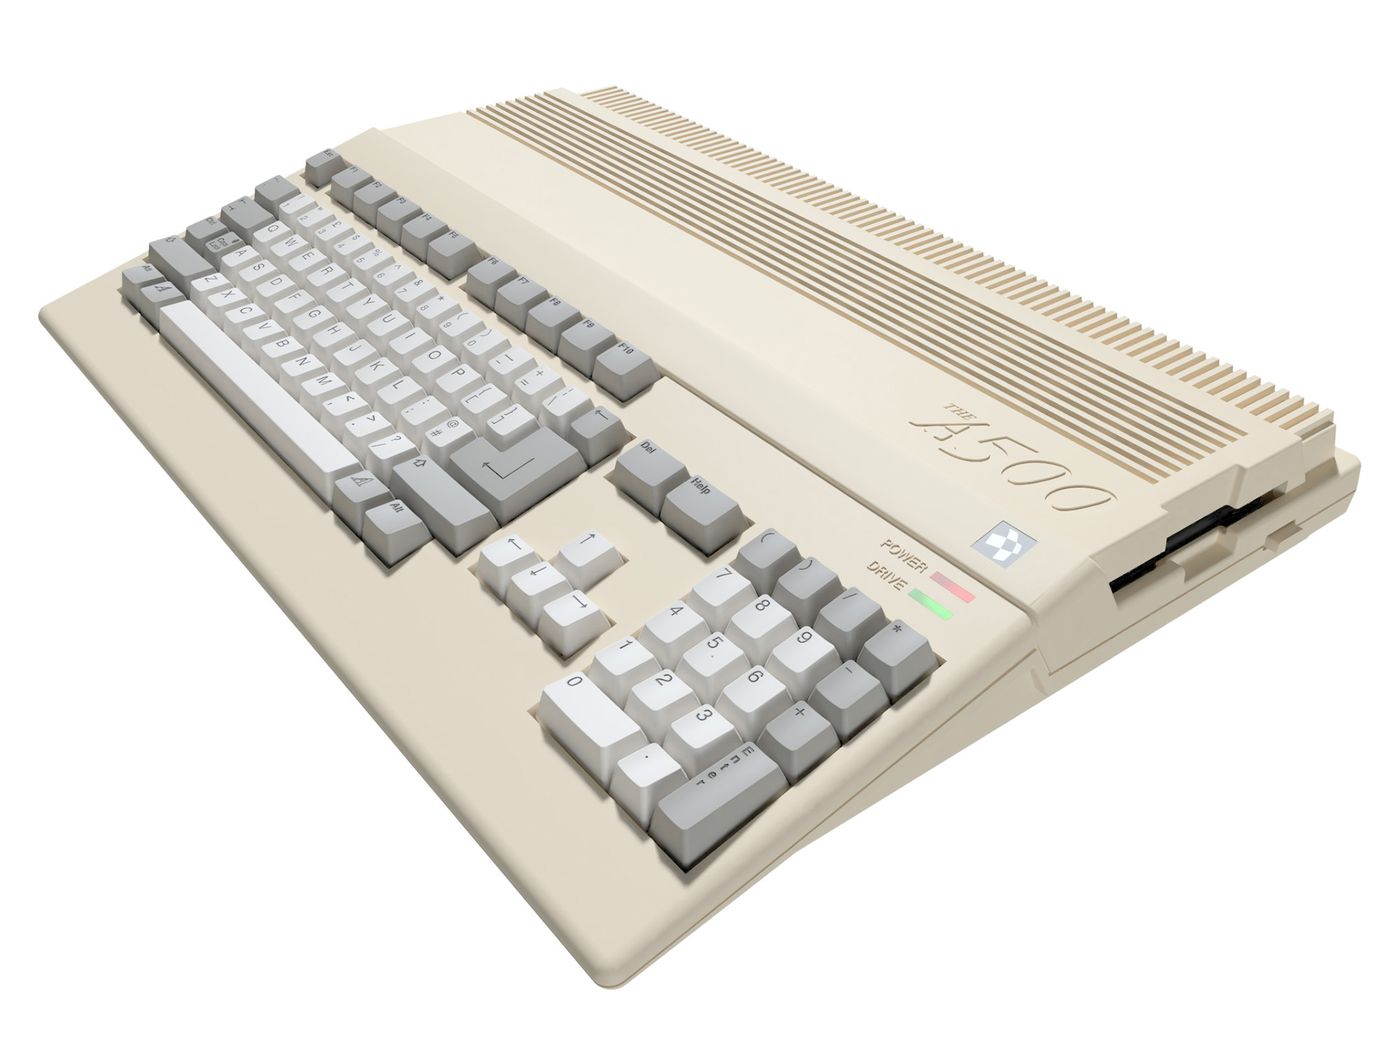 Amiga 500复刻版迷你主机A500 Mini将于2022年上市